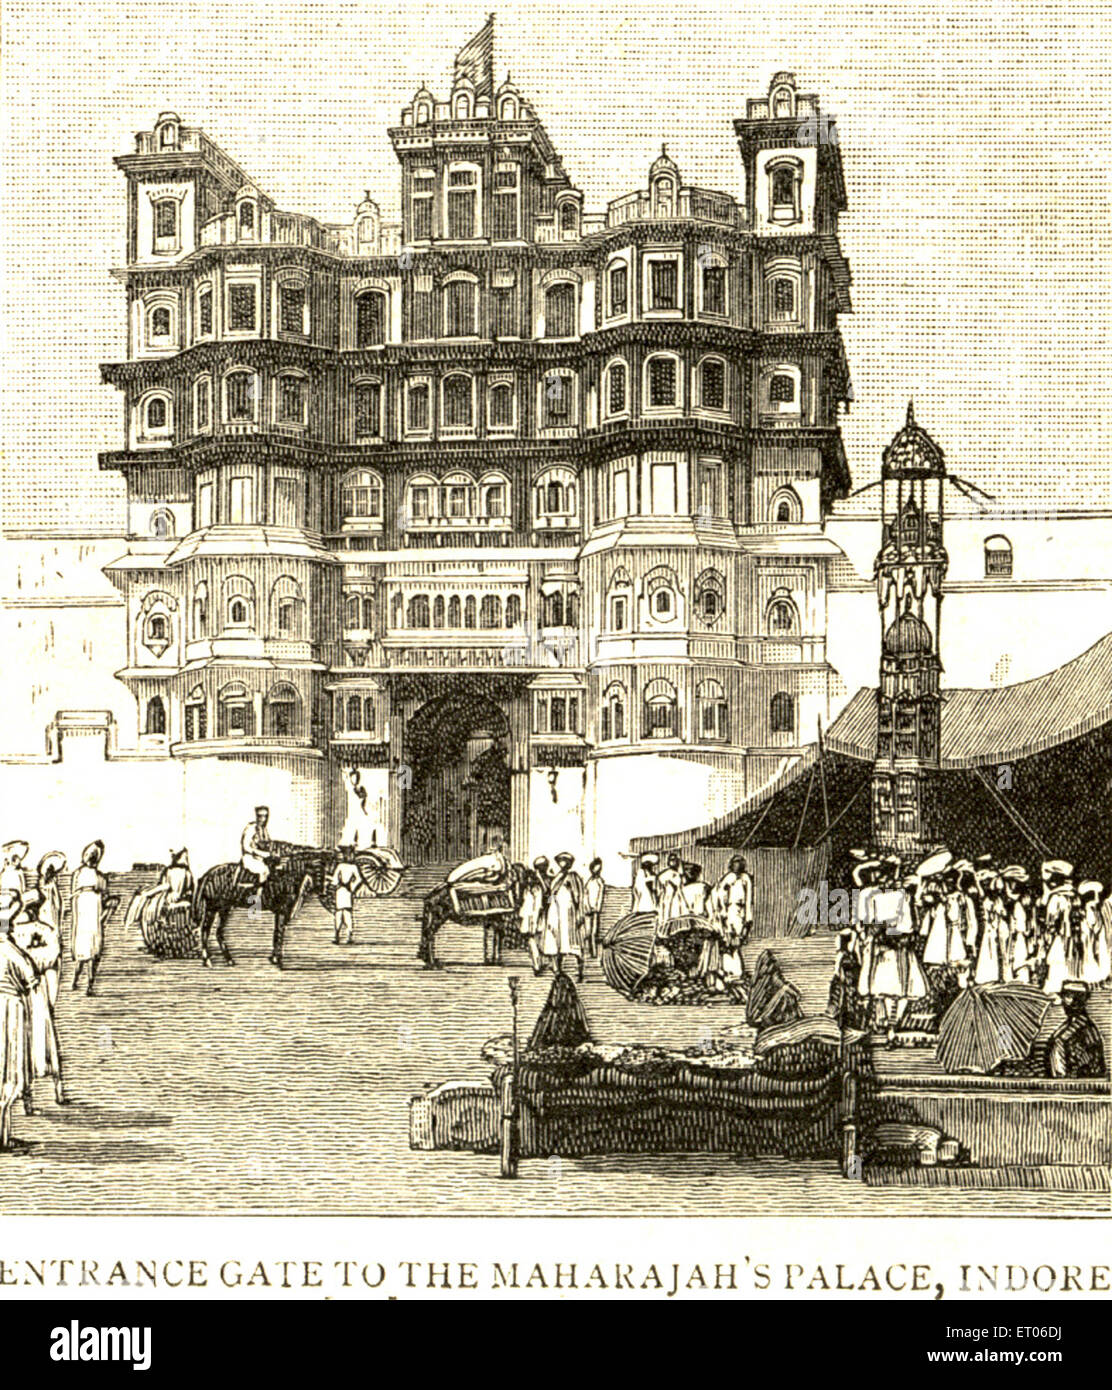 Rajwada Palast, Eingangstor zum Maharaja Palast, Grafik 24. Juli 1886, Indore, Uttar Pradesh, Indien, alter Jahrgang 1800s Stockfoto